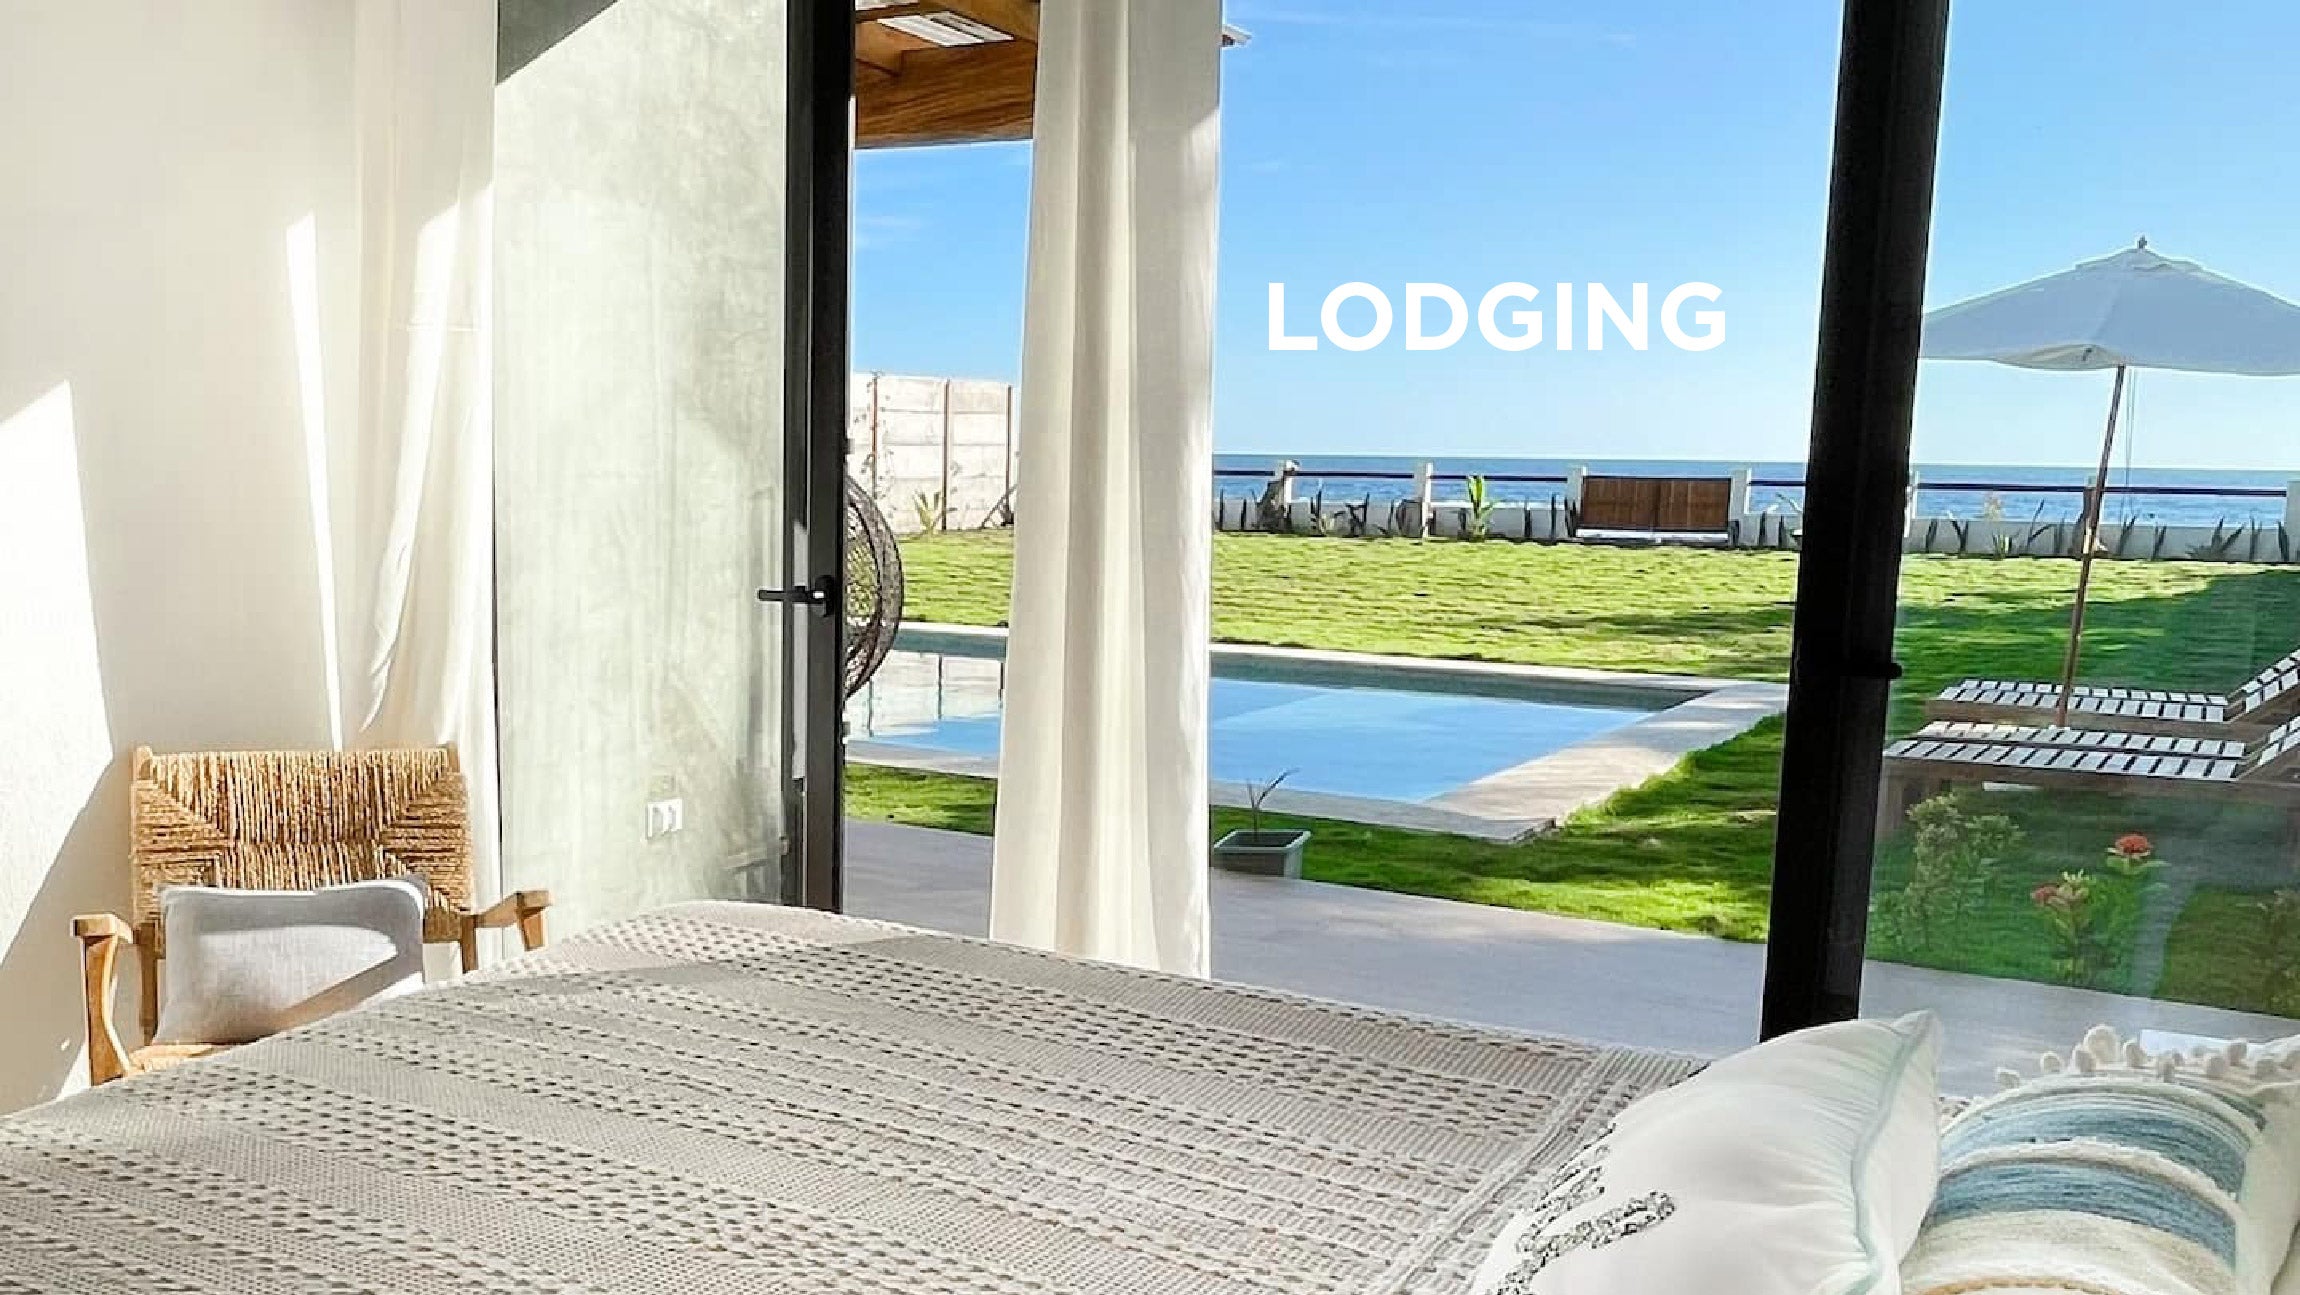 lodging-banner-img